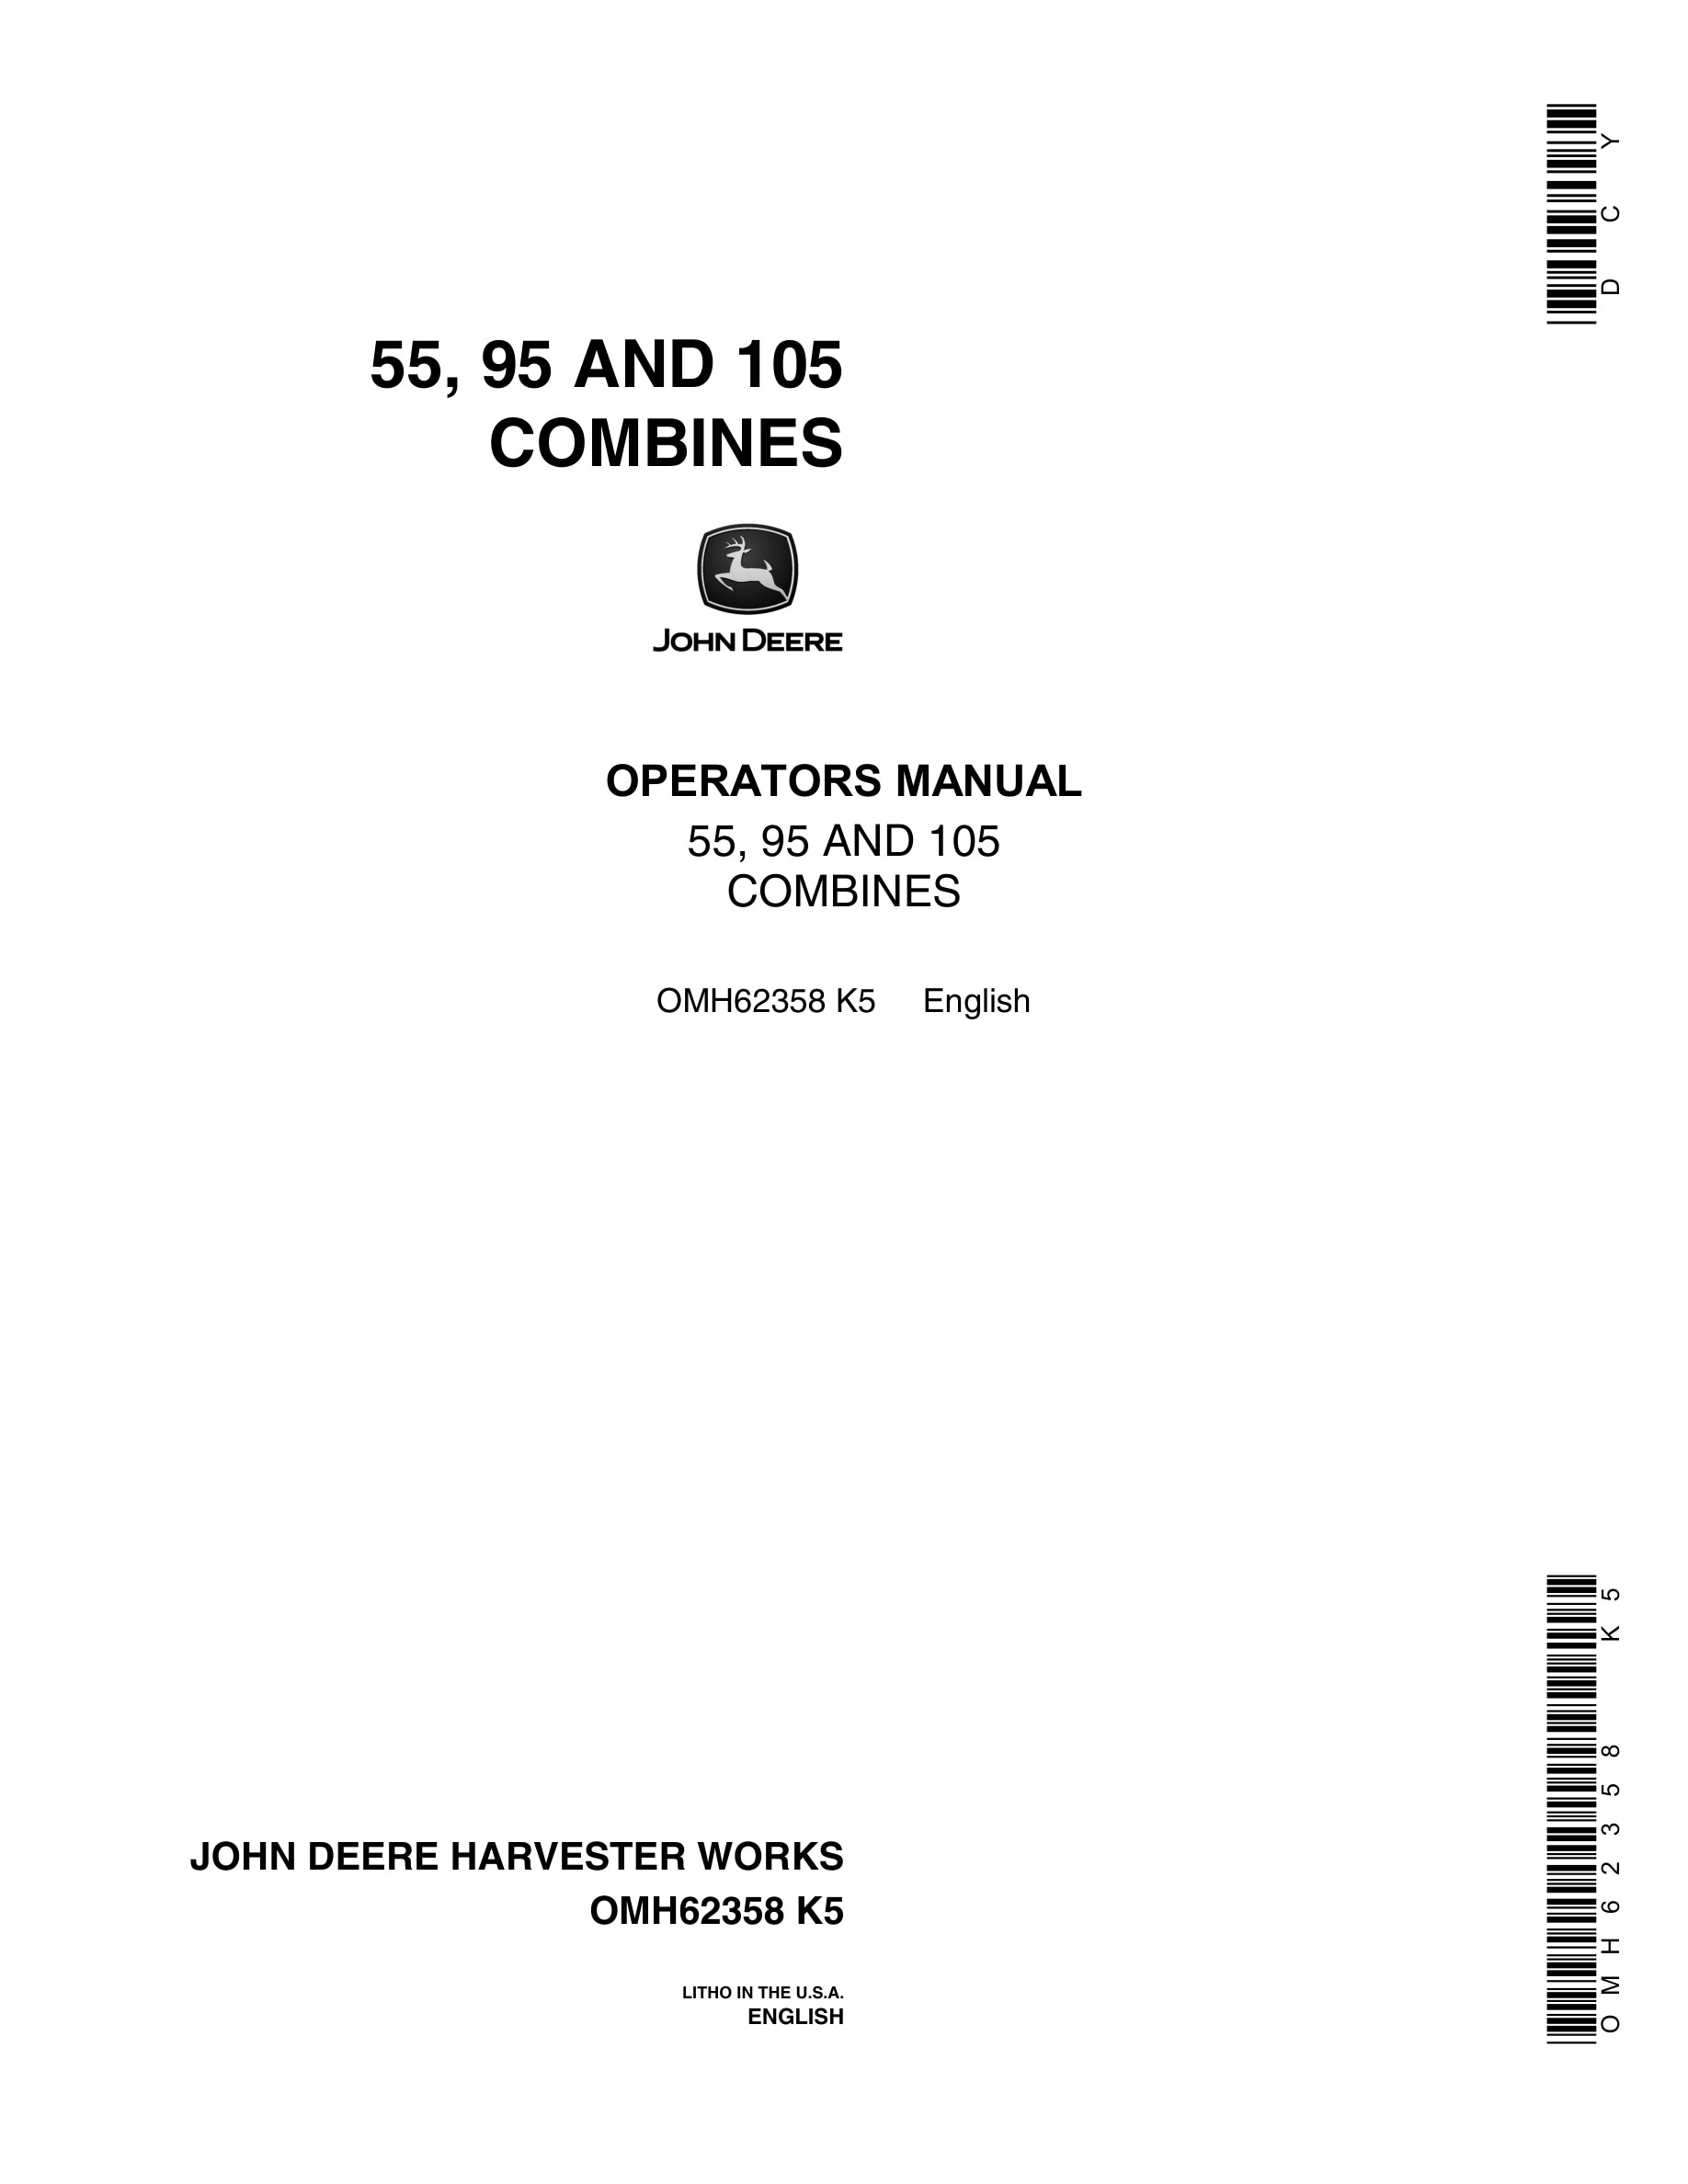 John Deere 55, 95 AND 105 Combine Operator Manual OMH62358-1